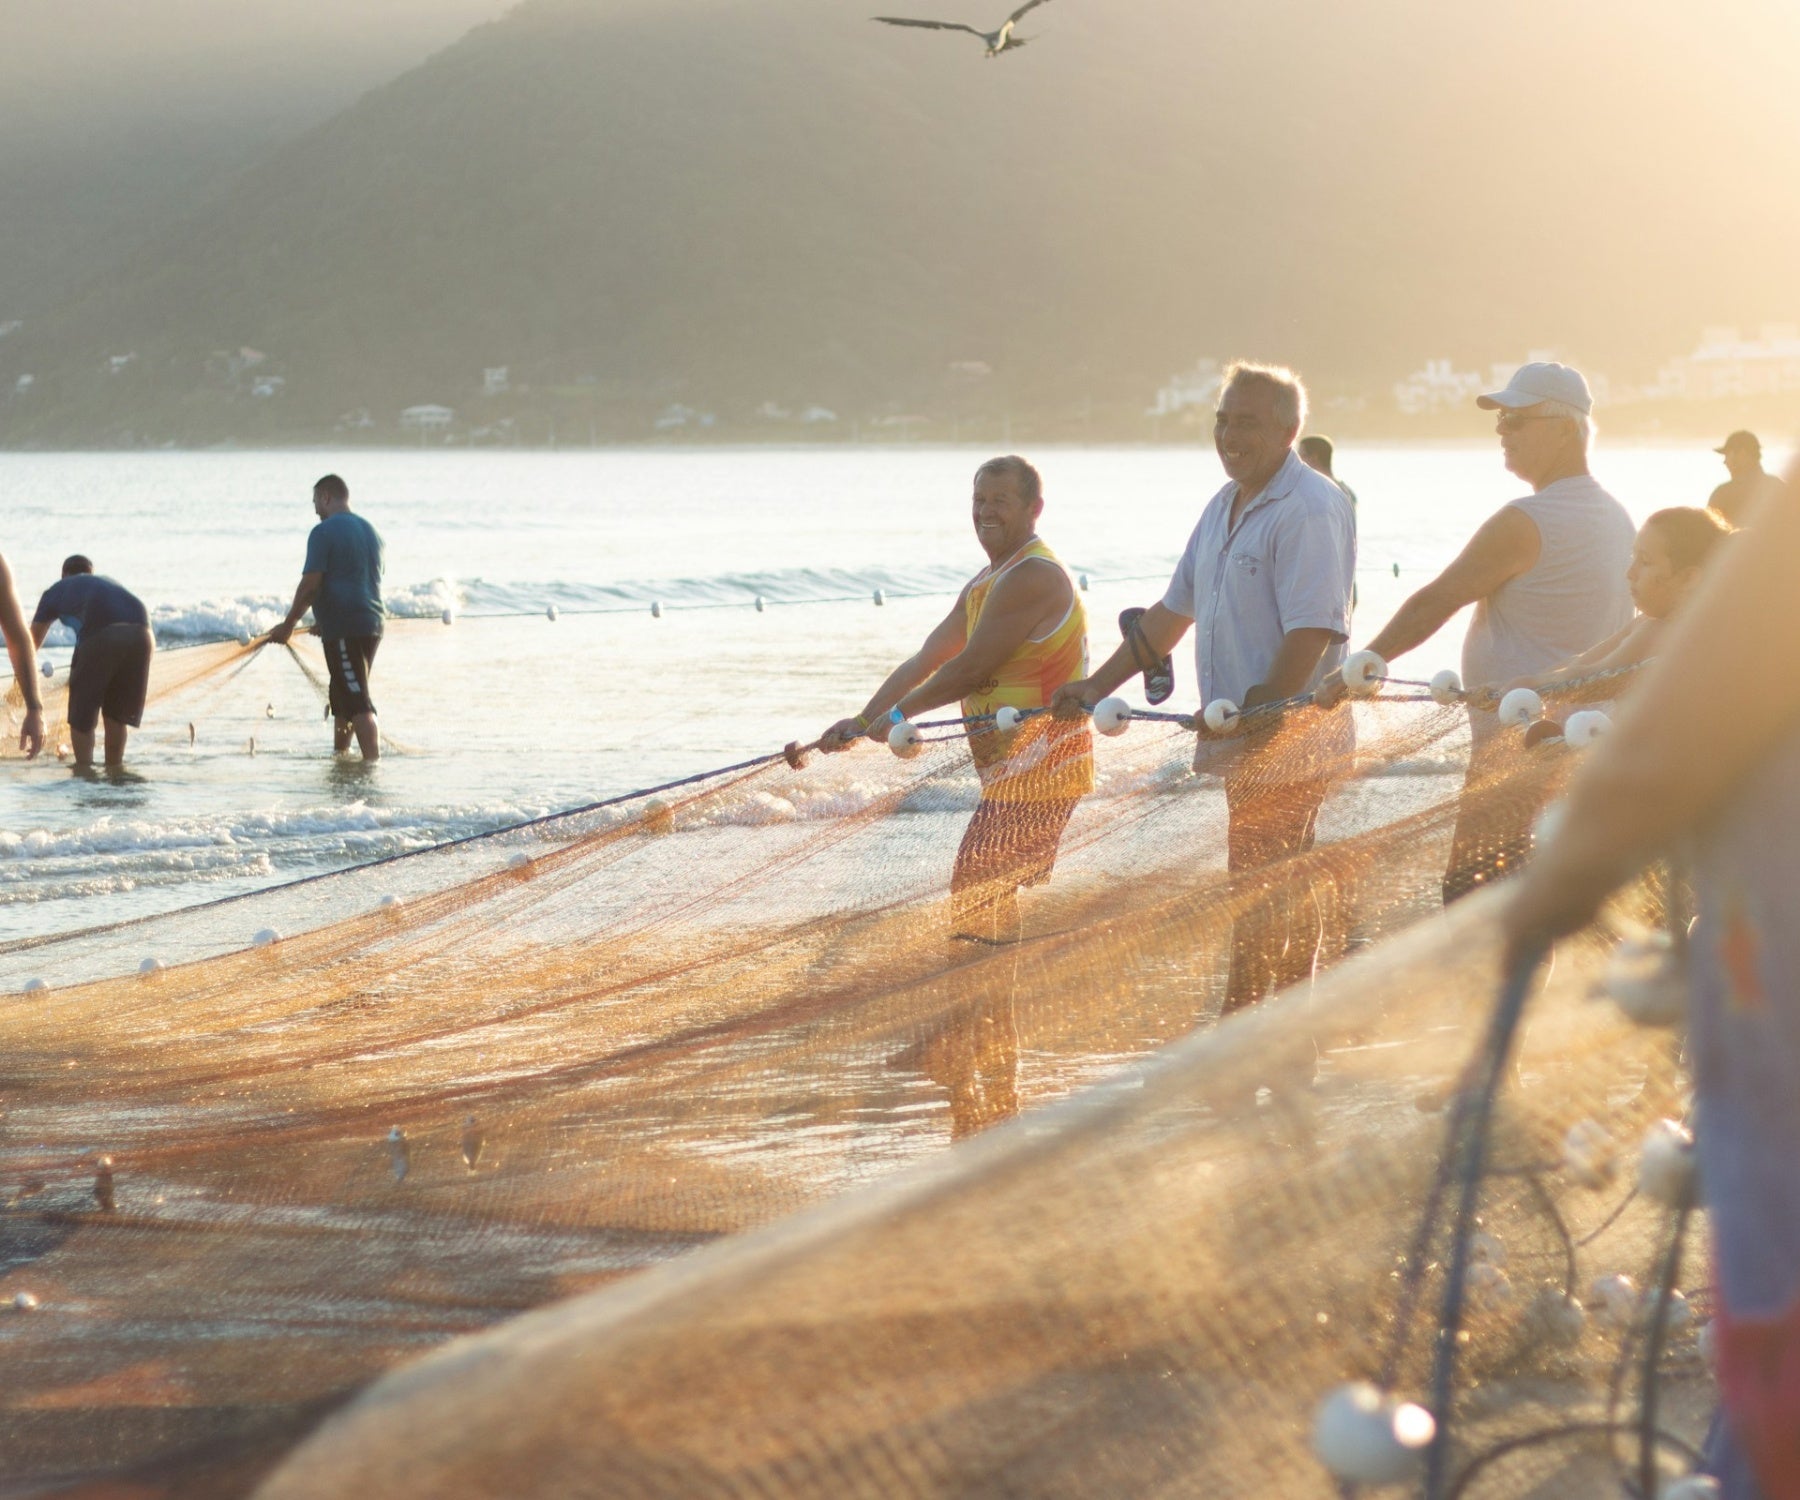 Custom beach seine netting pulled onto shore